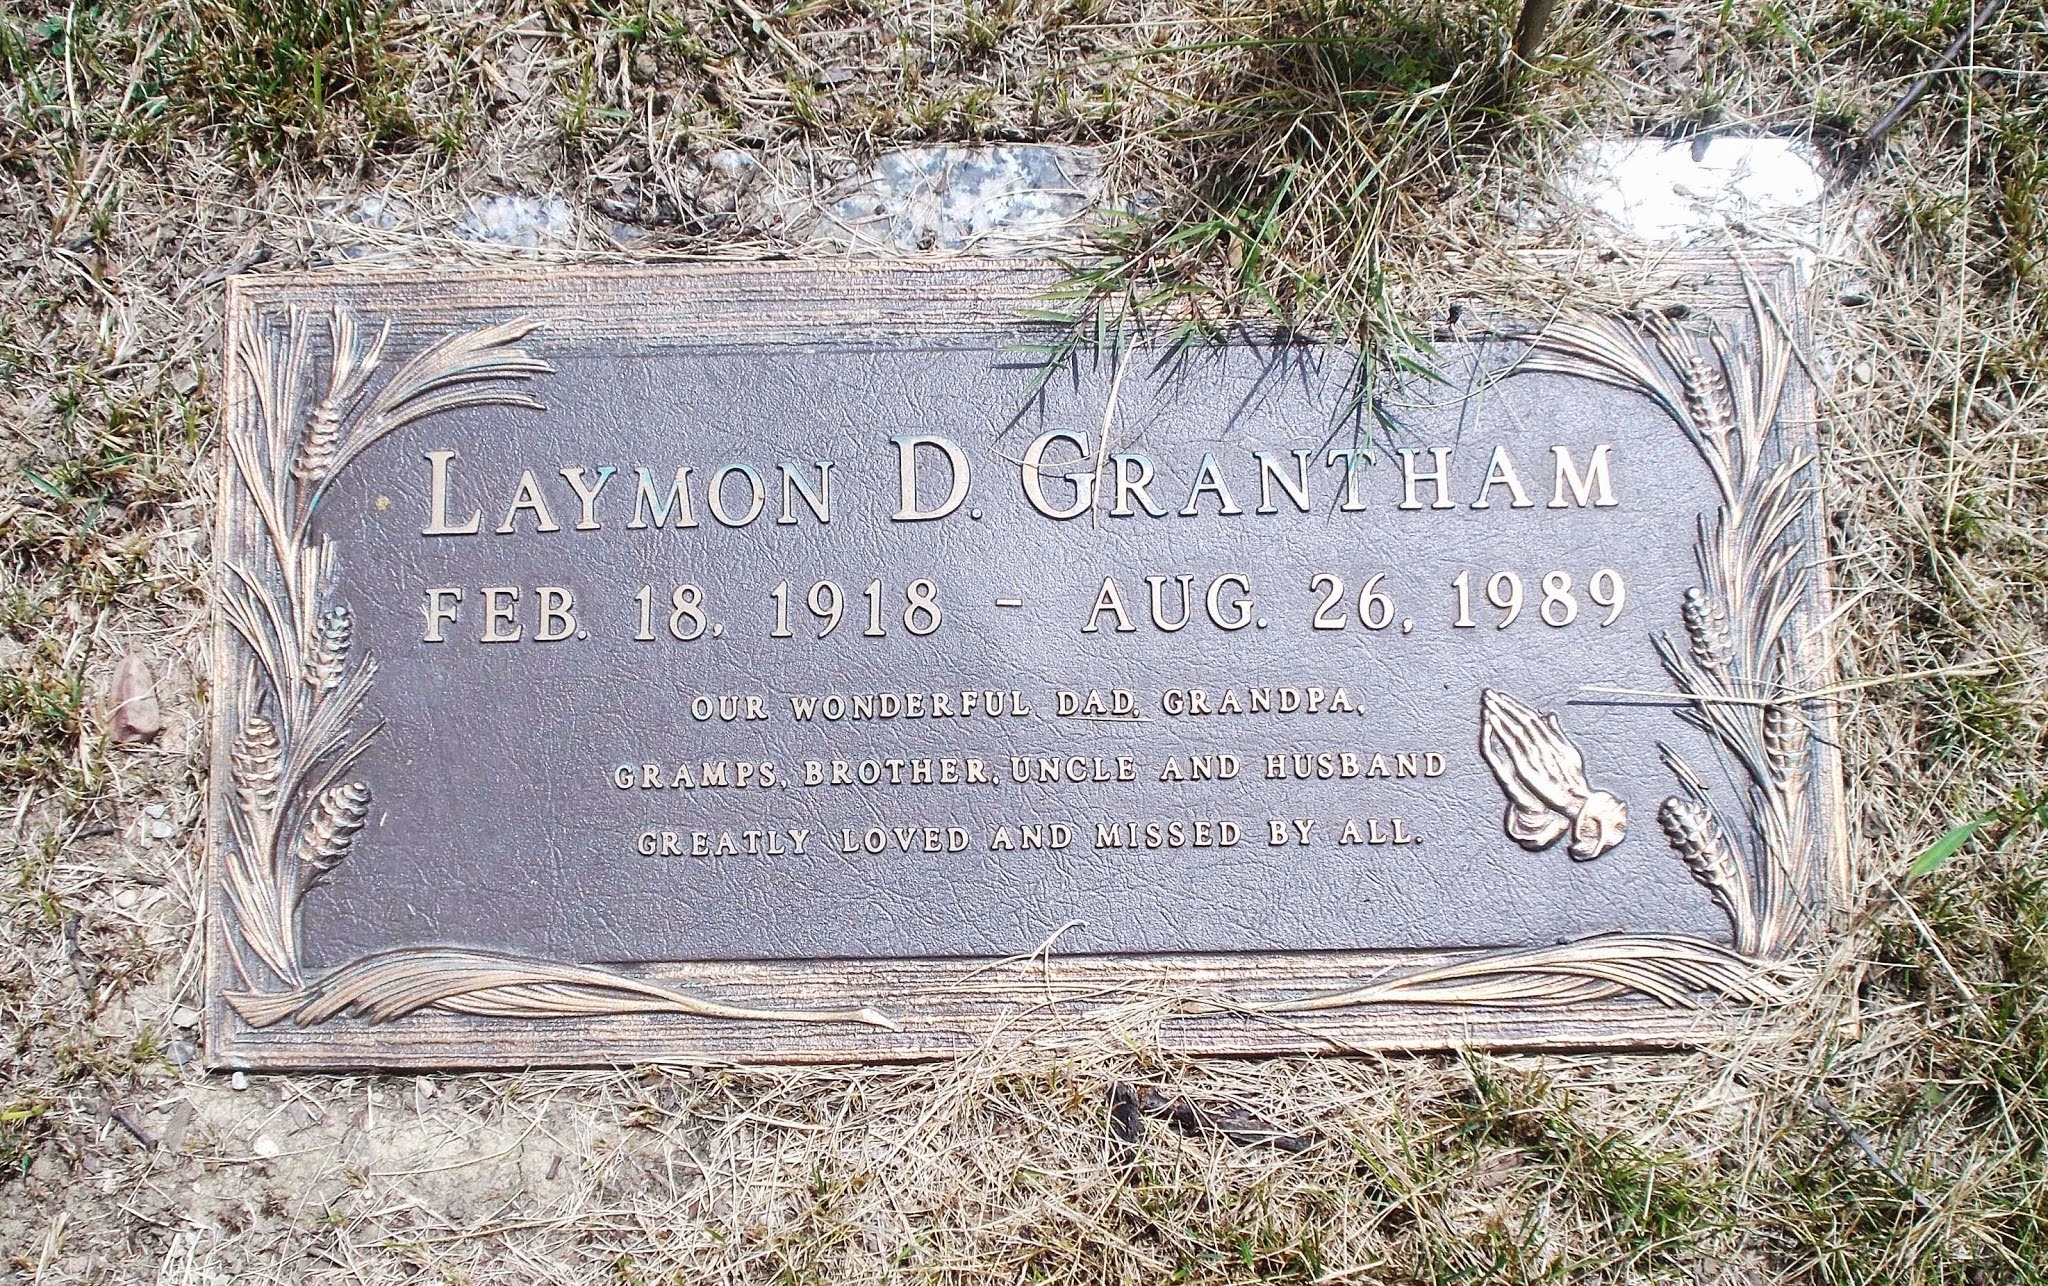 Laymon D Grantham